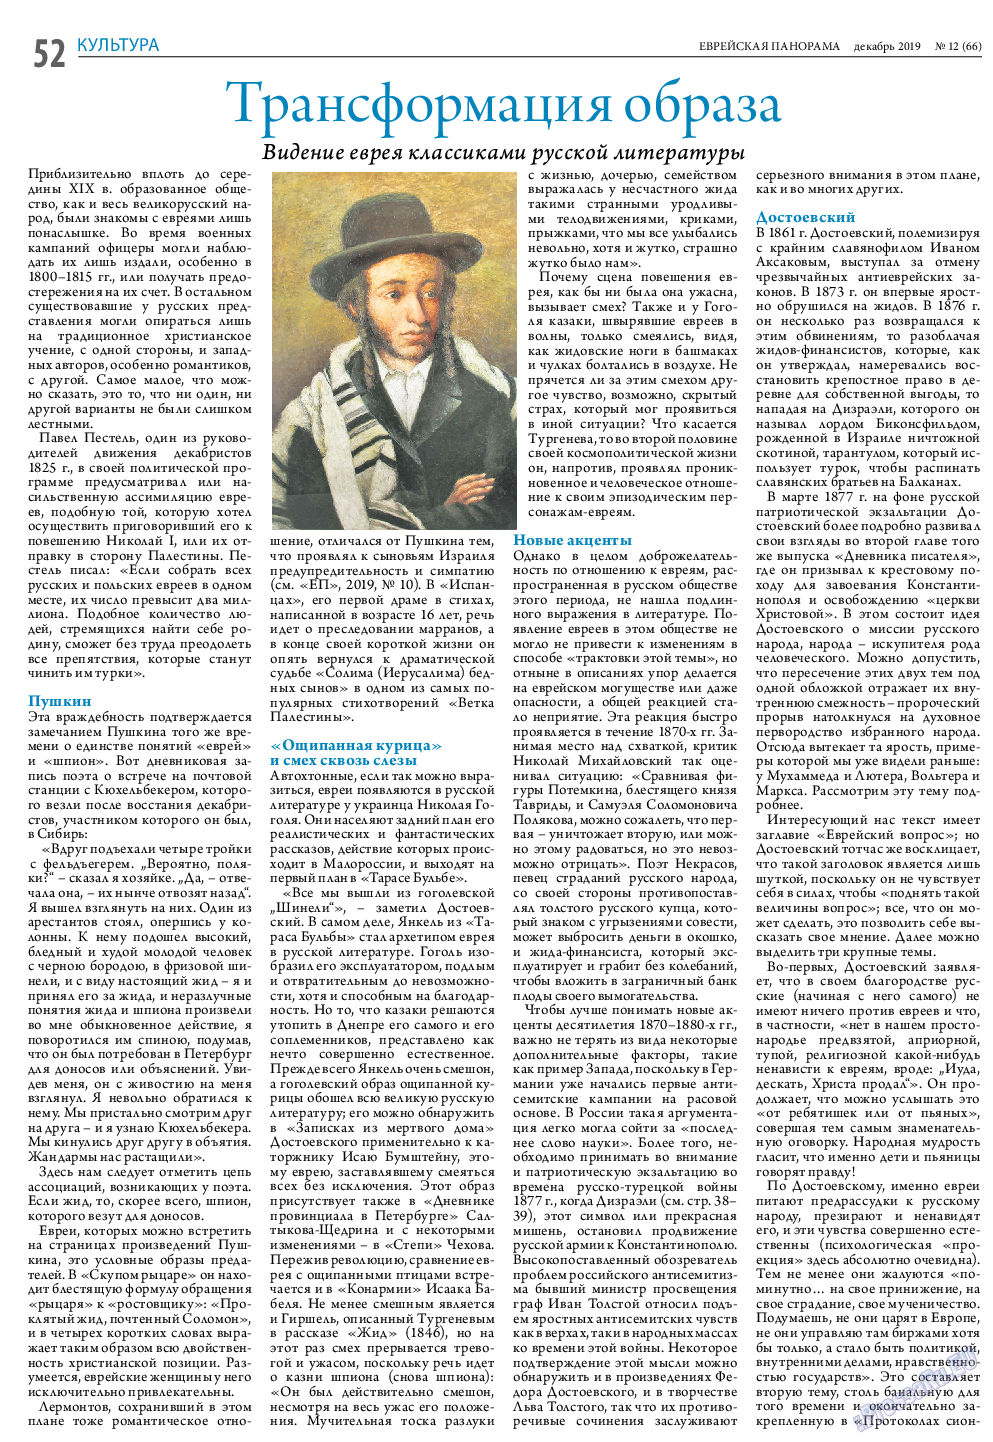 Еврейская панорама, газета. 2019 №12 стр.52